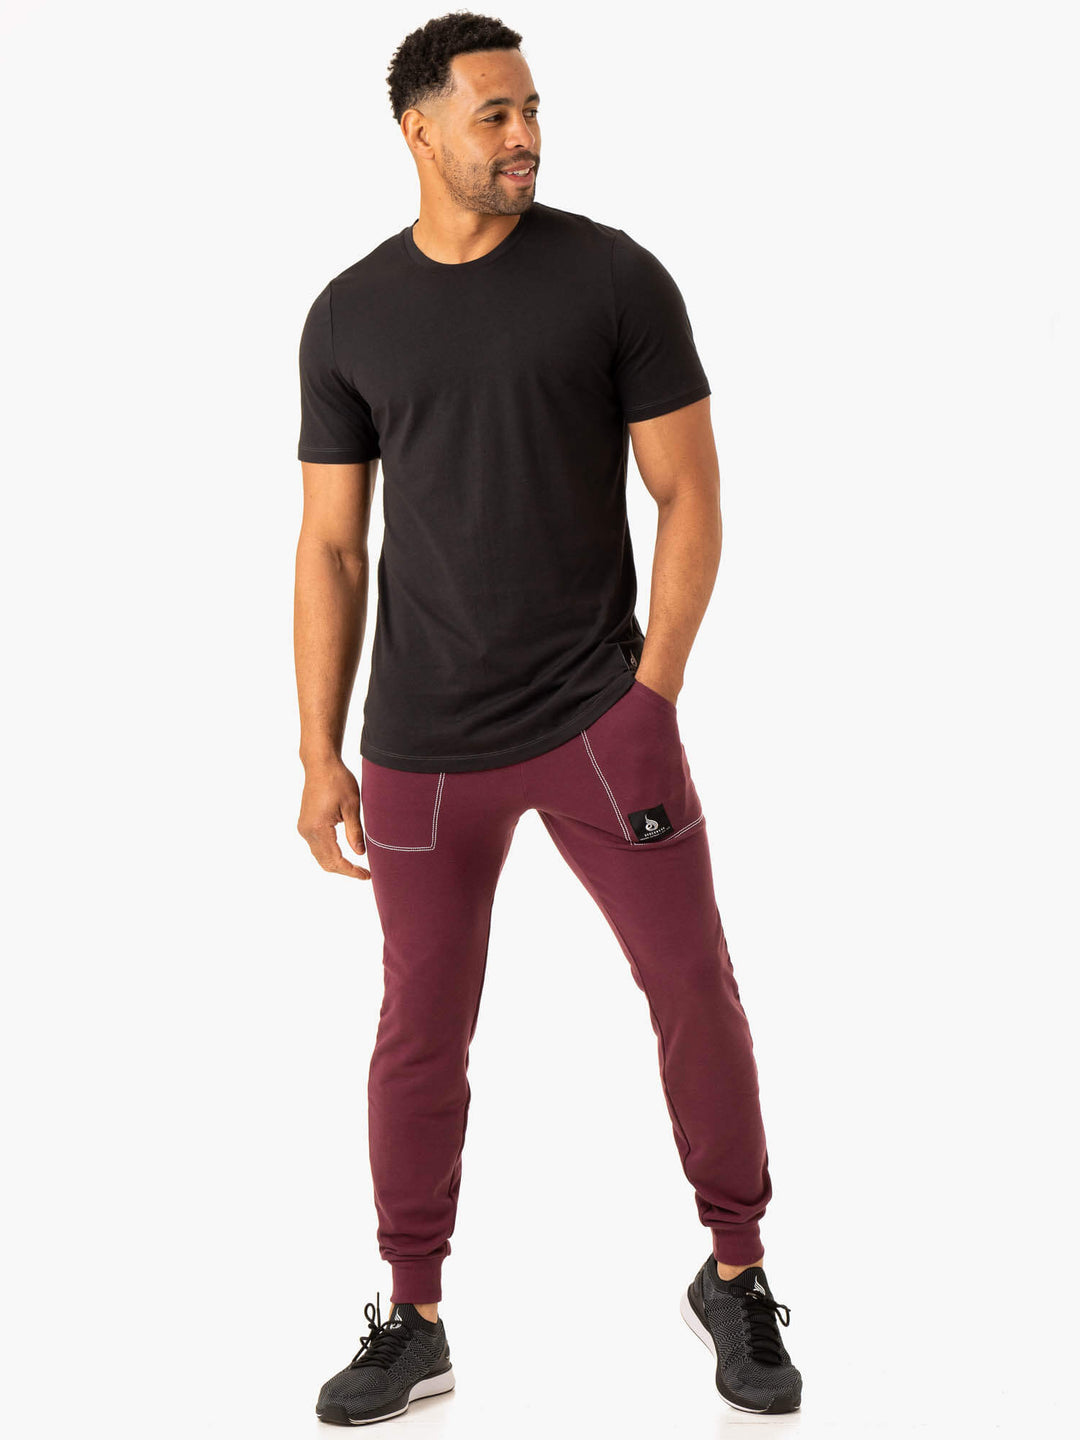 Vital T-Shirt - Faded Black Clothing Ryderwear 